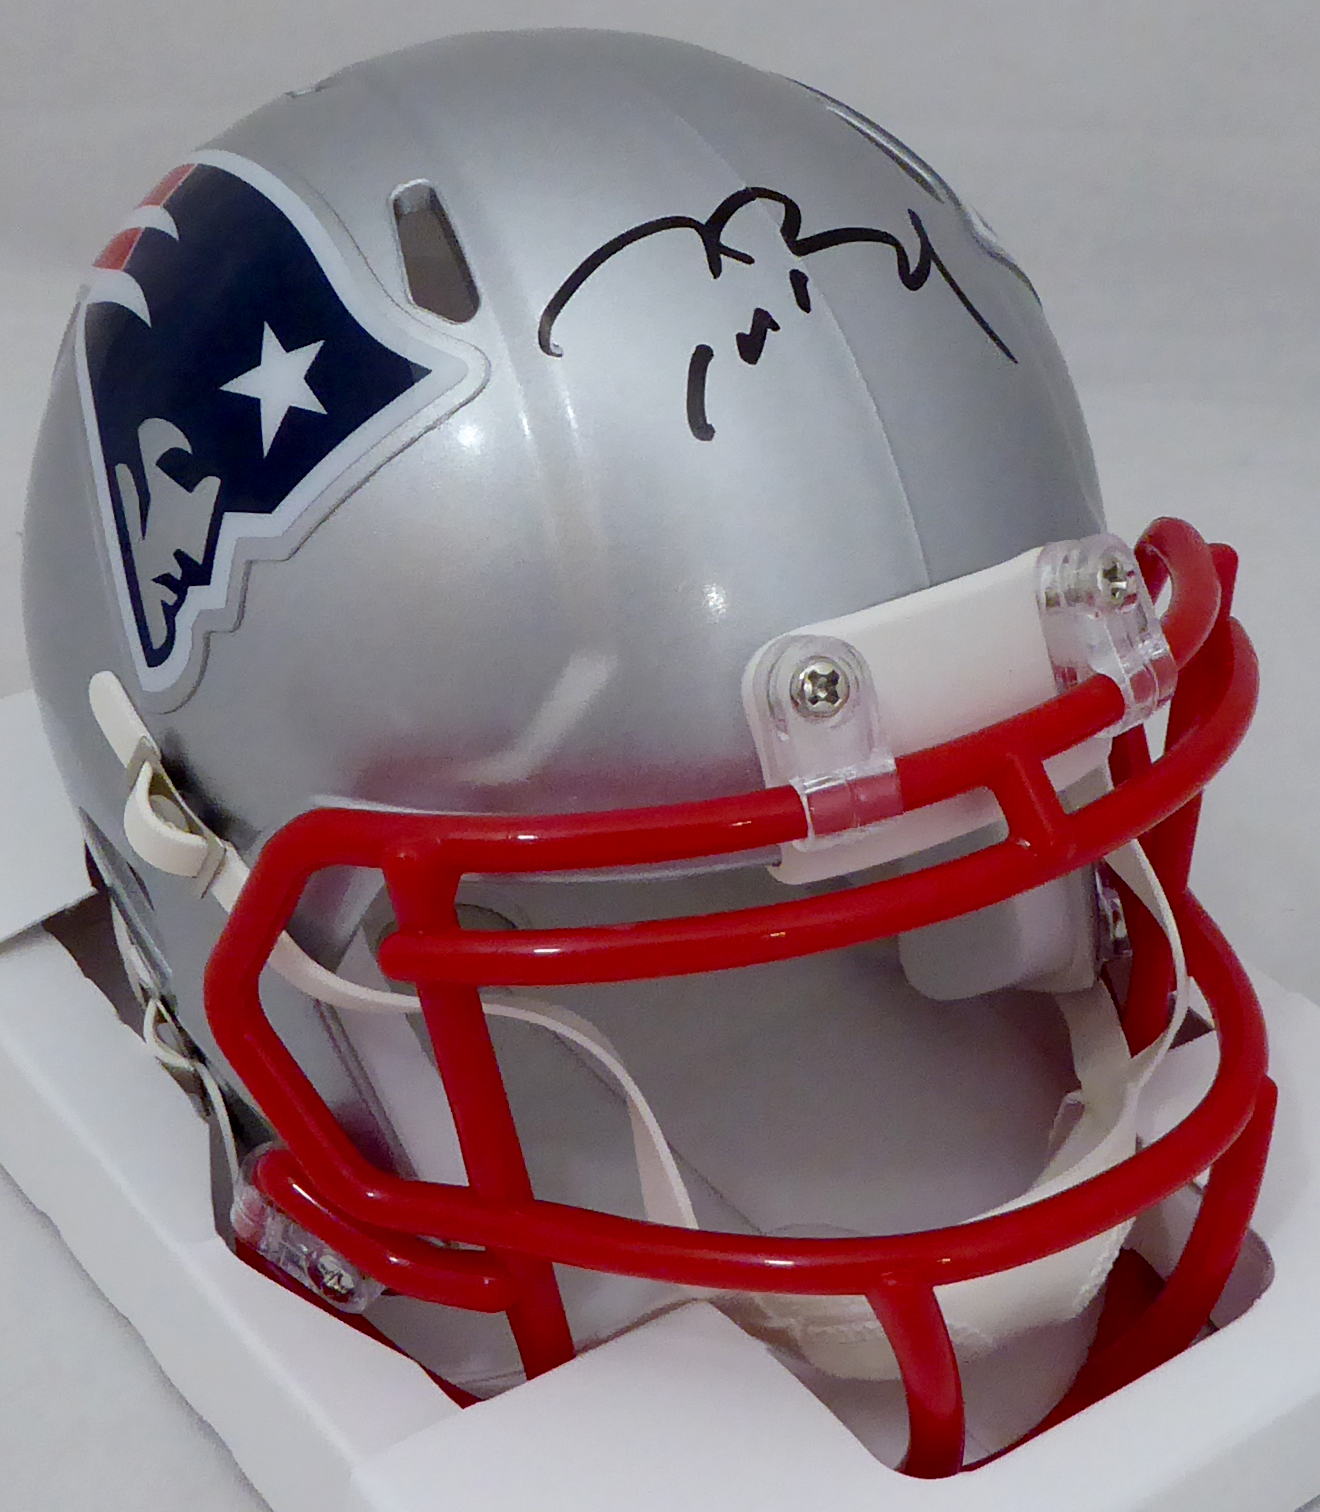 TOM BRADY Autographed New England Patriots Flash Speed Authentic